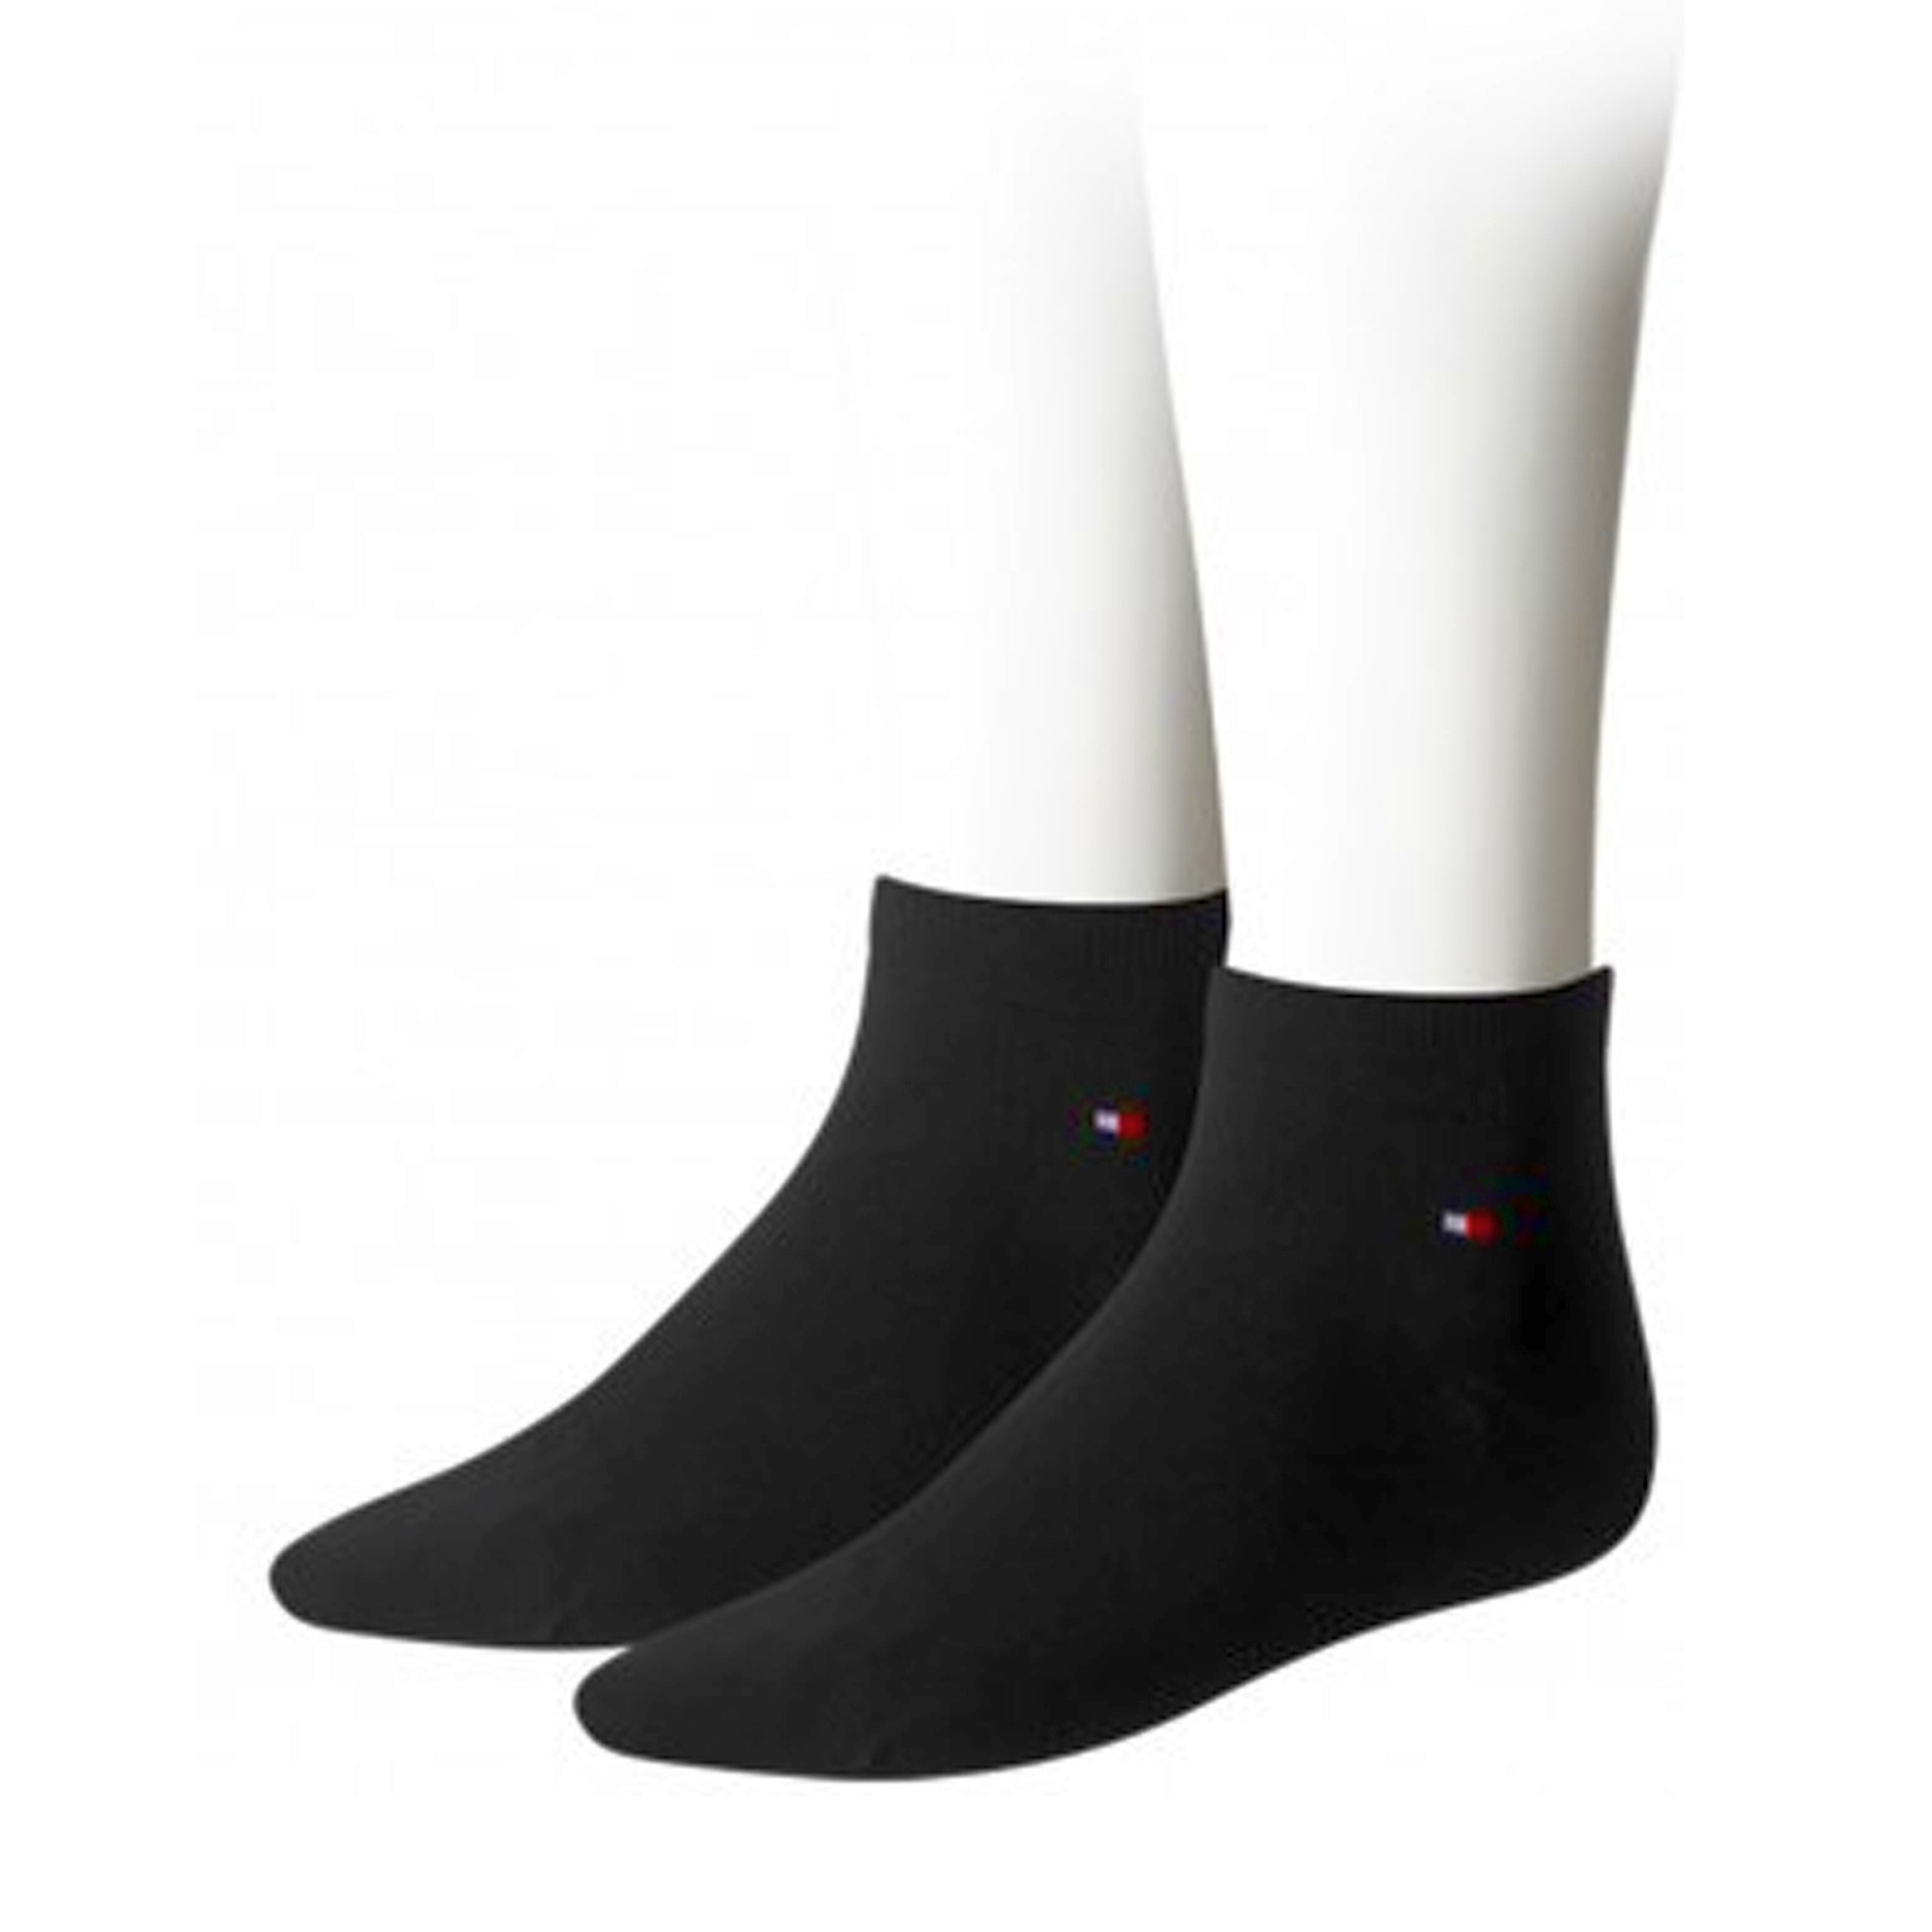 Tommy Hilfiger socks 342025001 200 Black